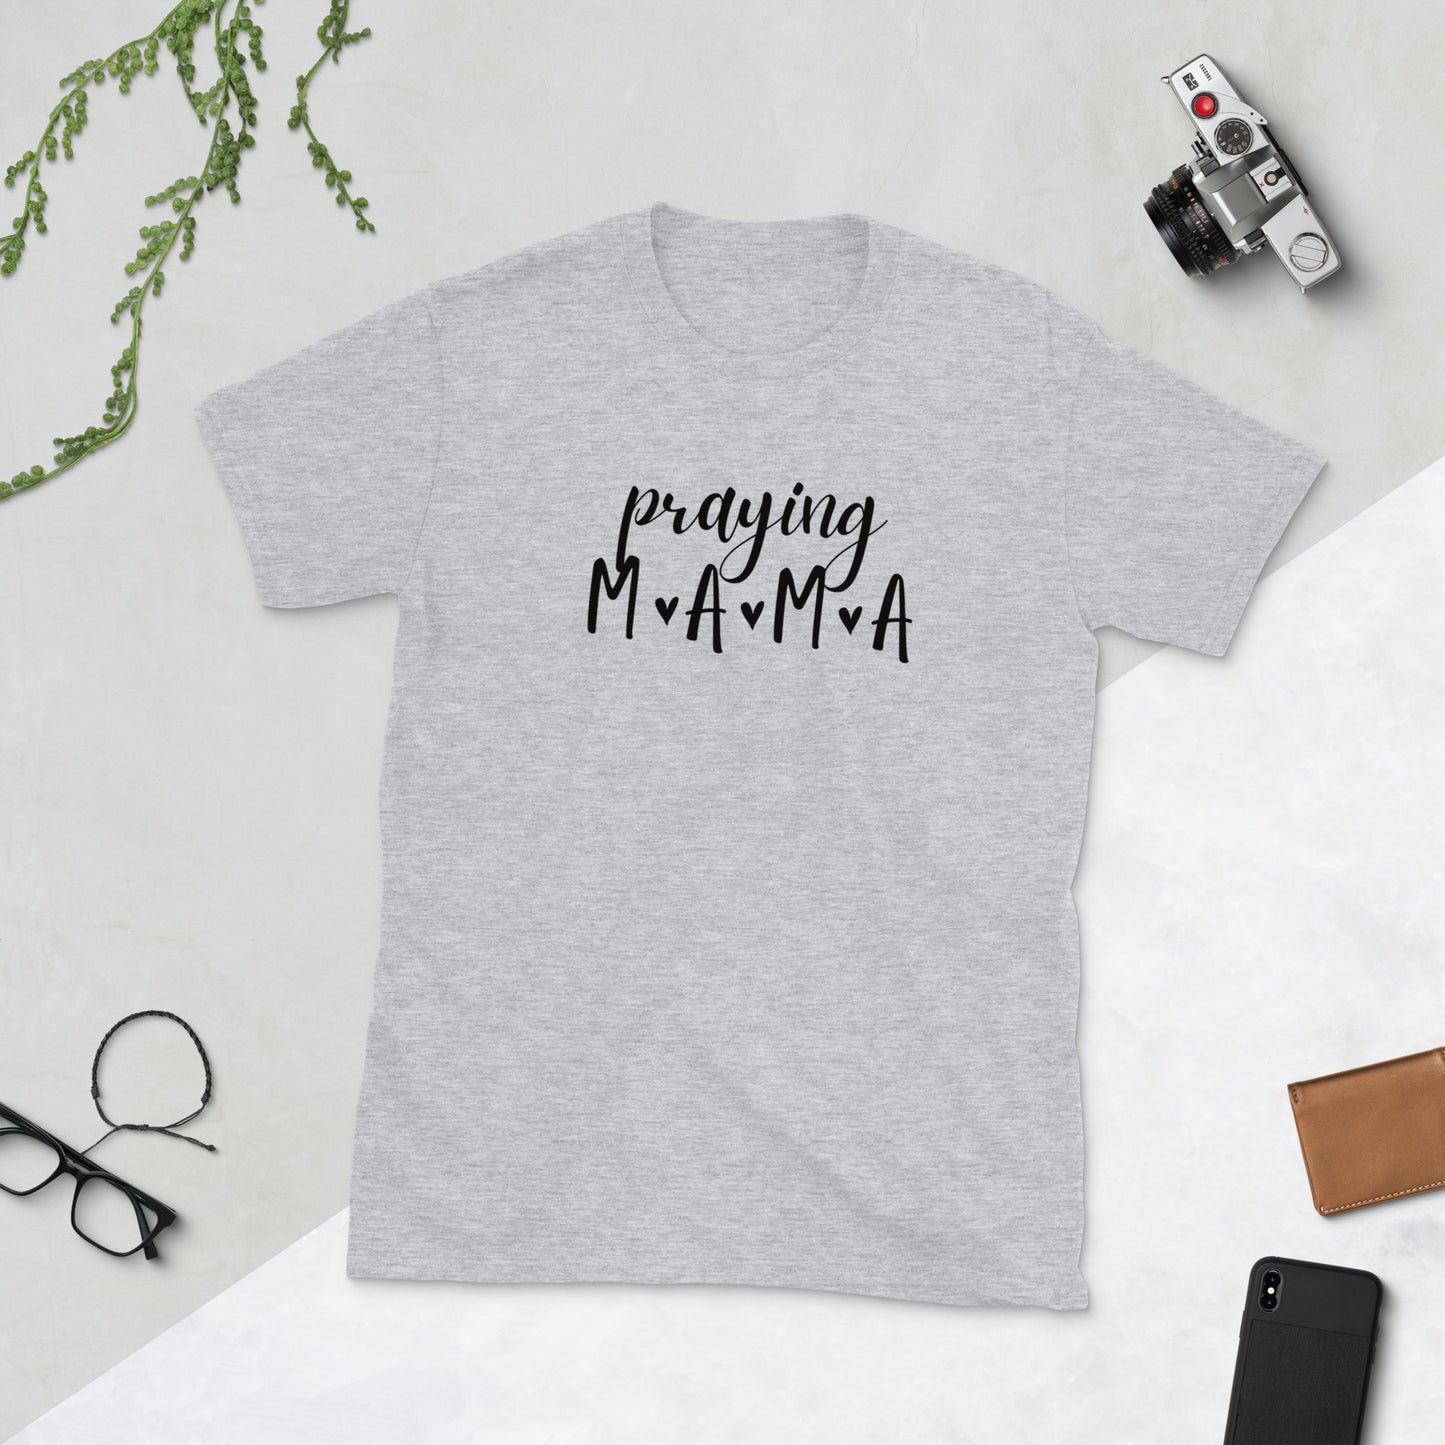 Praying Mama t-shirt